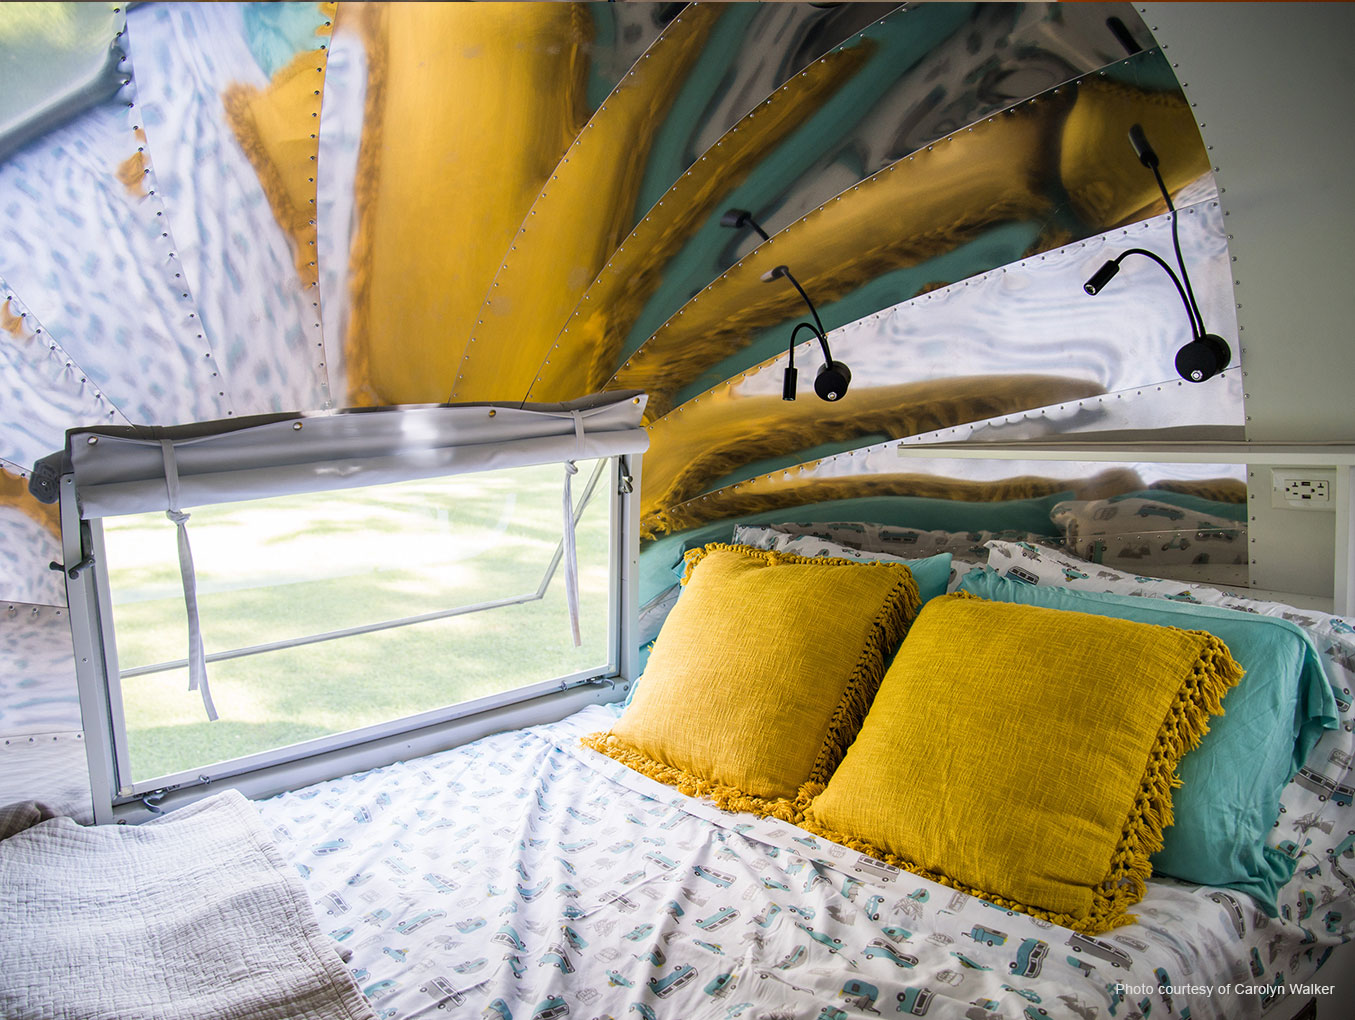 Airstream Overlander bedroom with shiny aluminum endcap